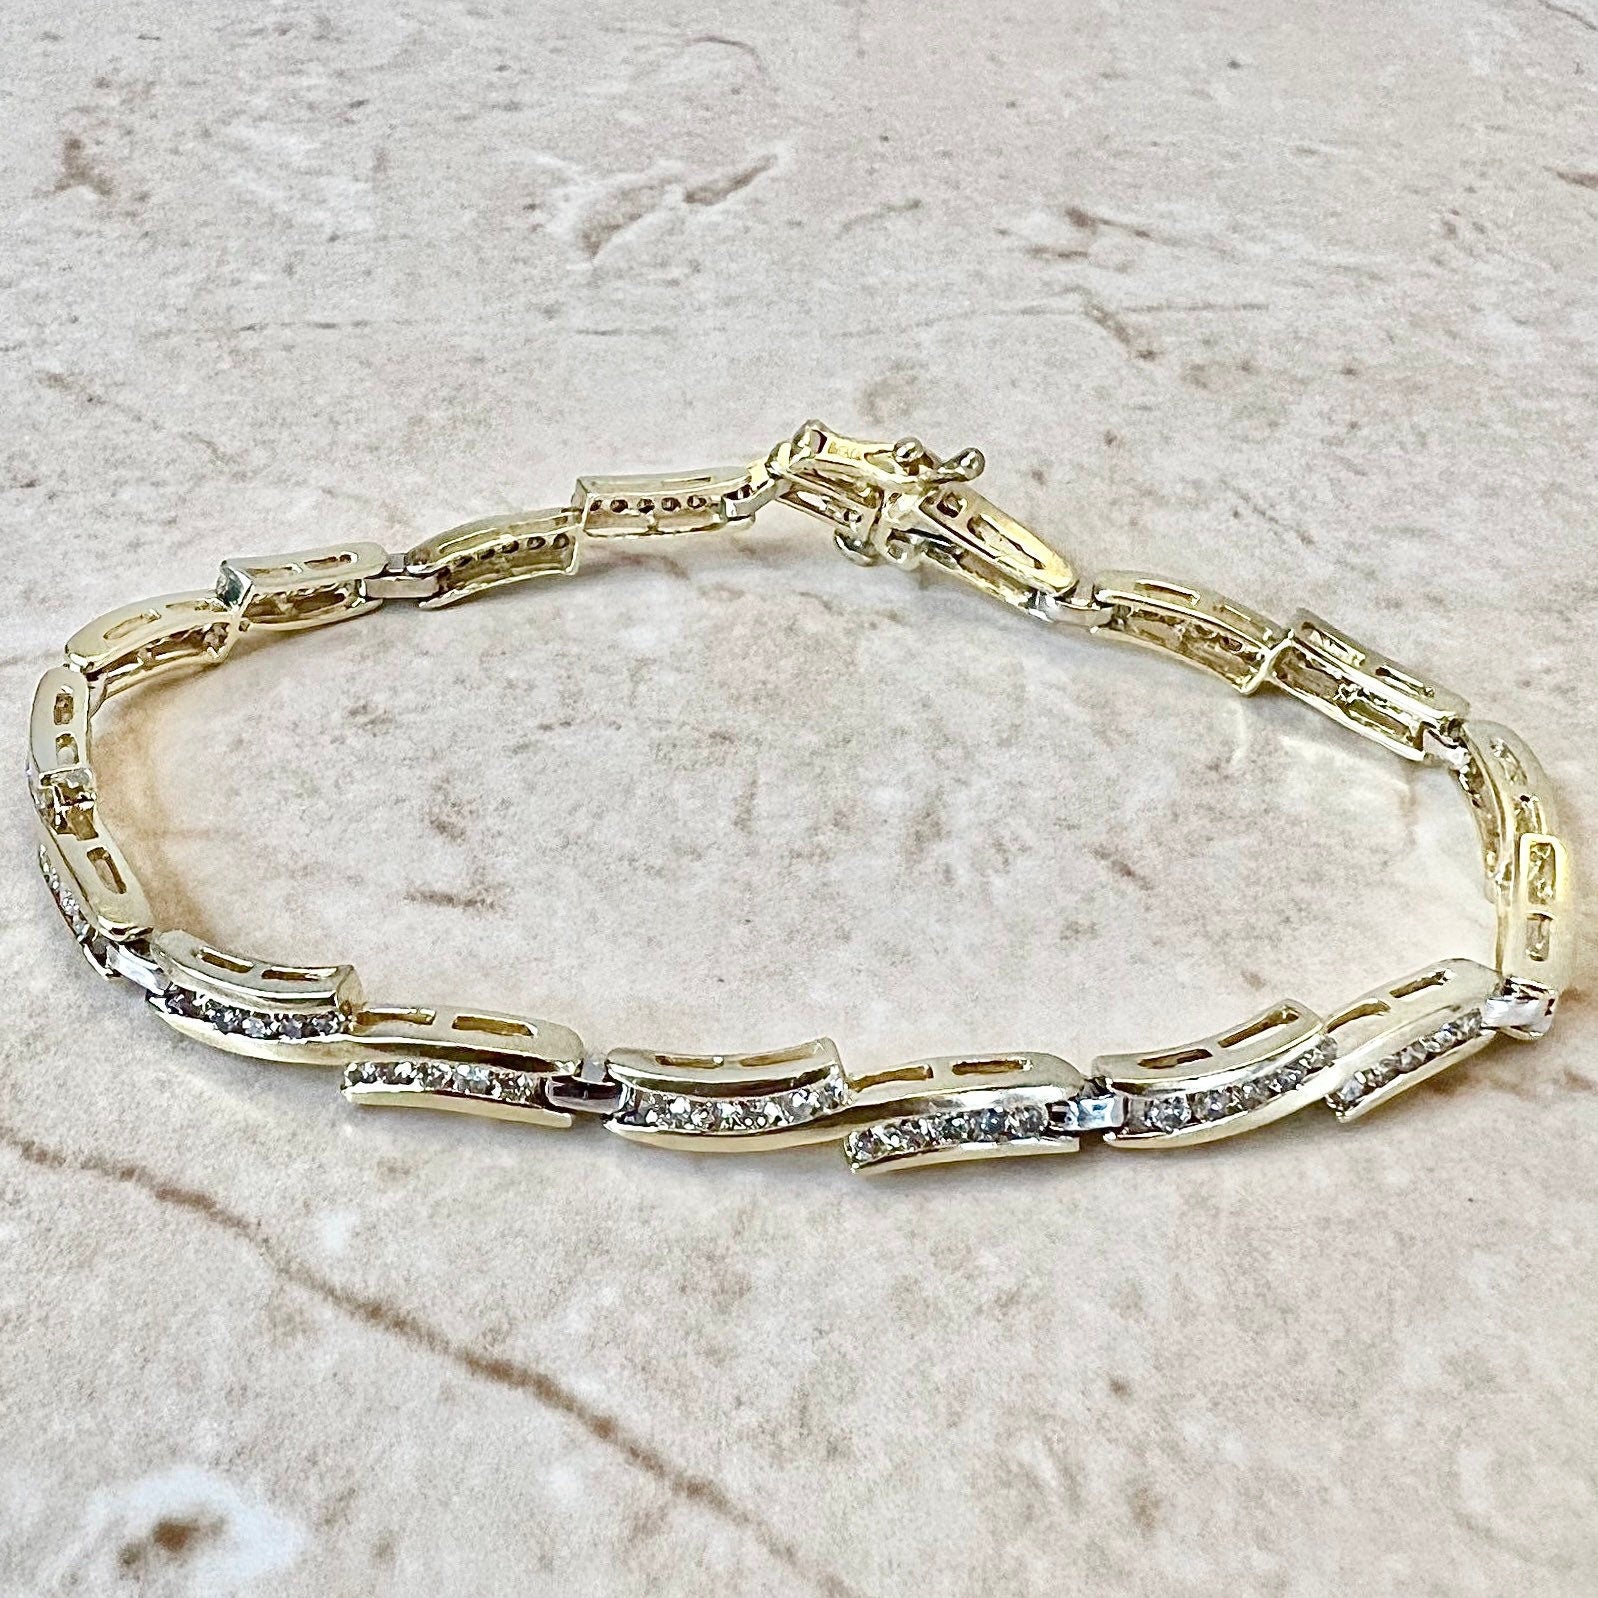 Vintage 14K Diamond Line Bracelet 2 CTTW - Yellow Gold Diamond Bracelet - Diamond Tennis Bracelet - Link Bracelet - Yellow Gold Bracelet